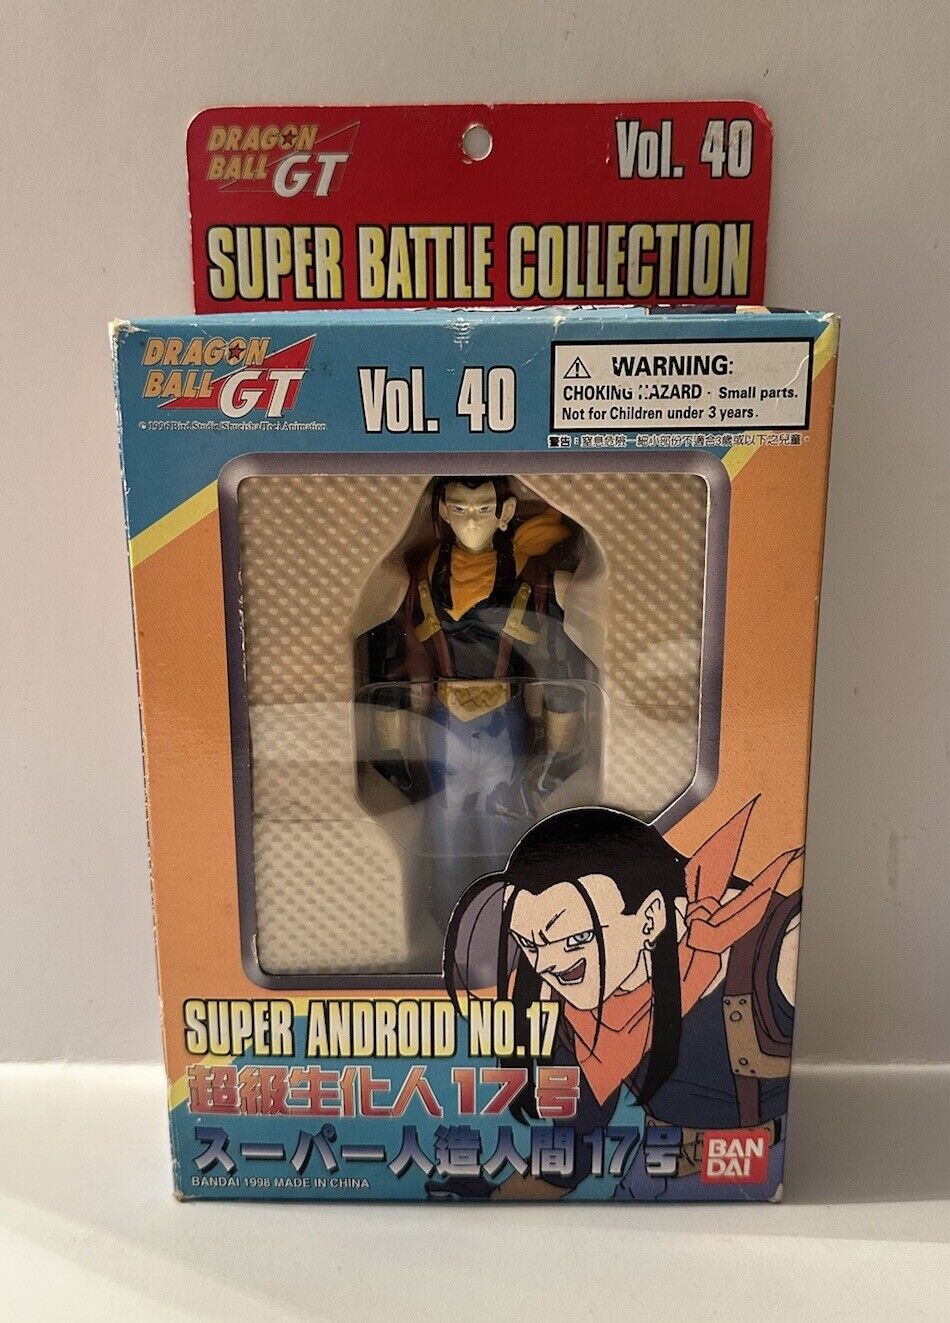 Super Android No. 17 - Vol 40 Dragon Ball GT 1996 - Super Battle Collection